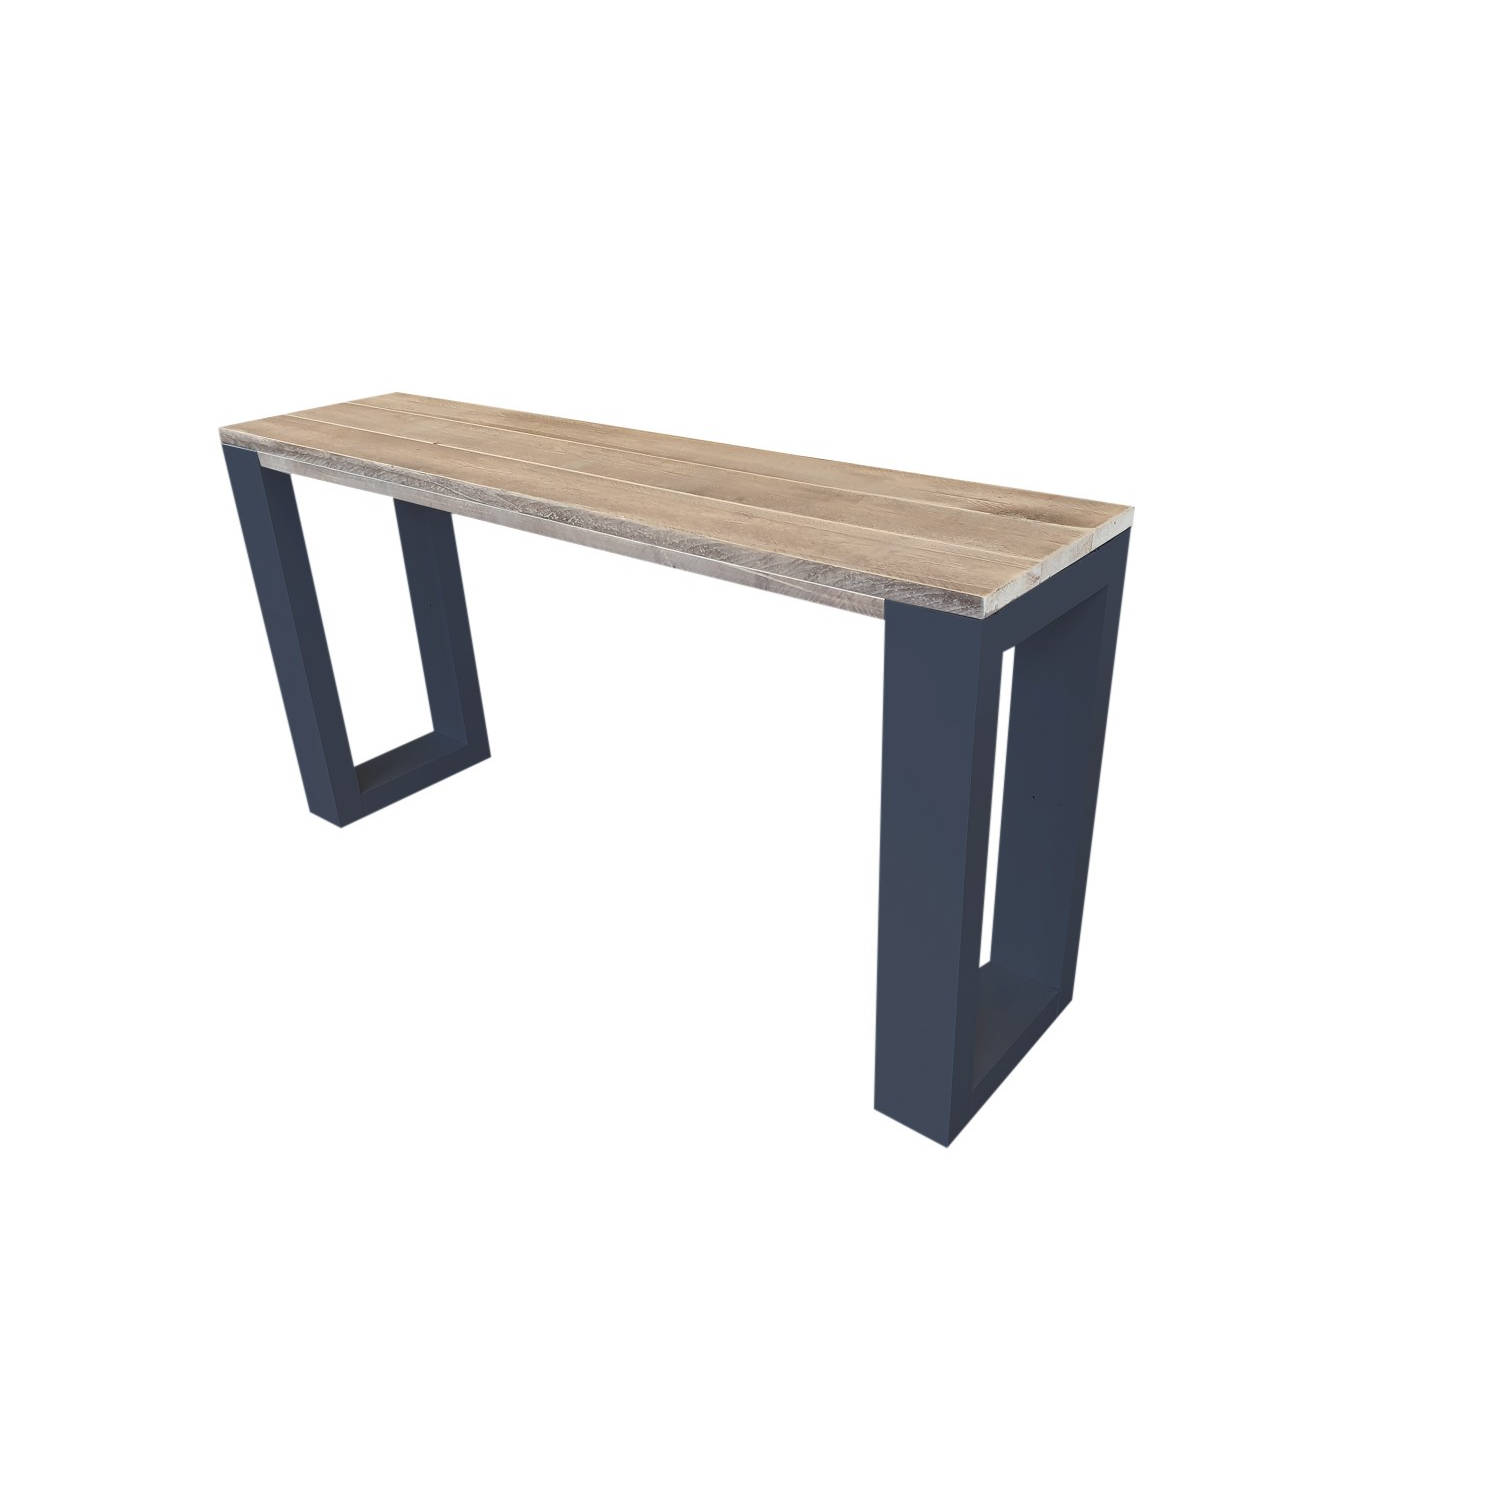 Wood4you - Side table enkel steigerhout - 130 cm